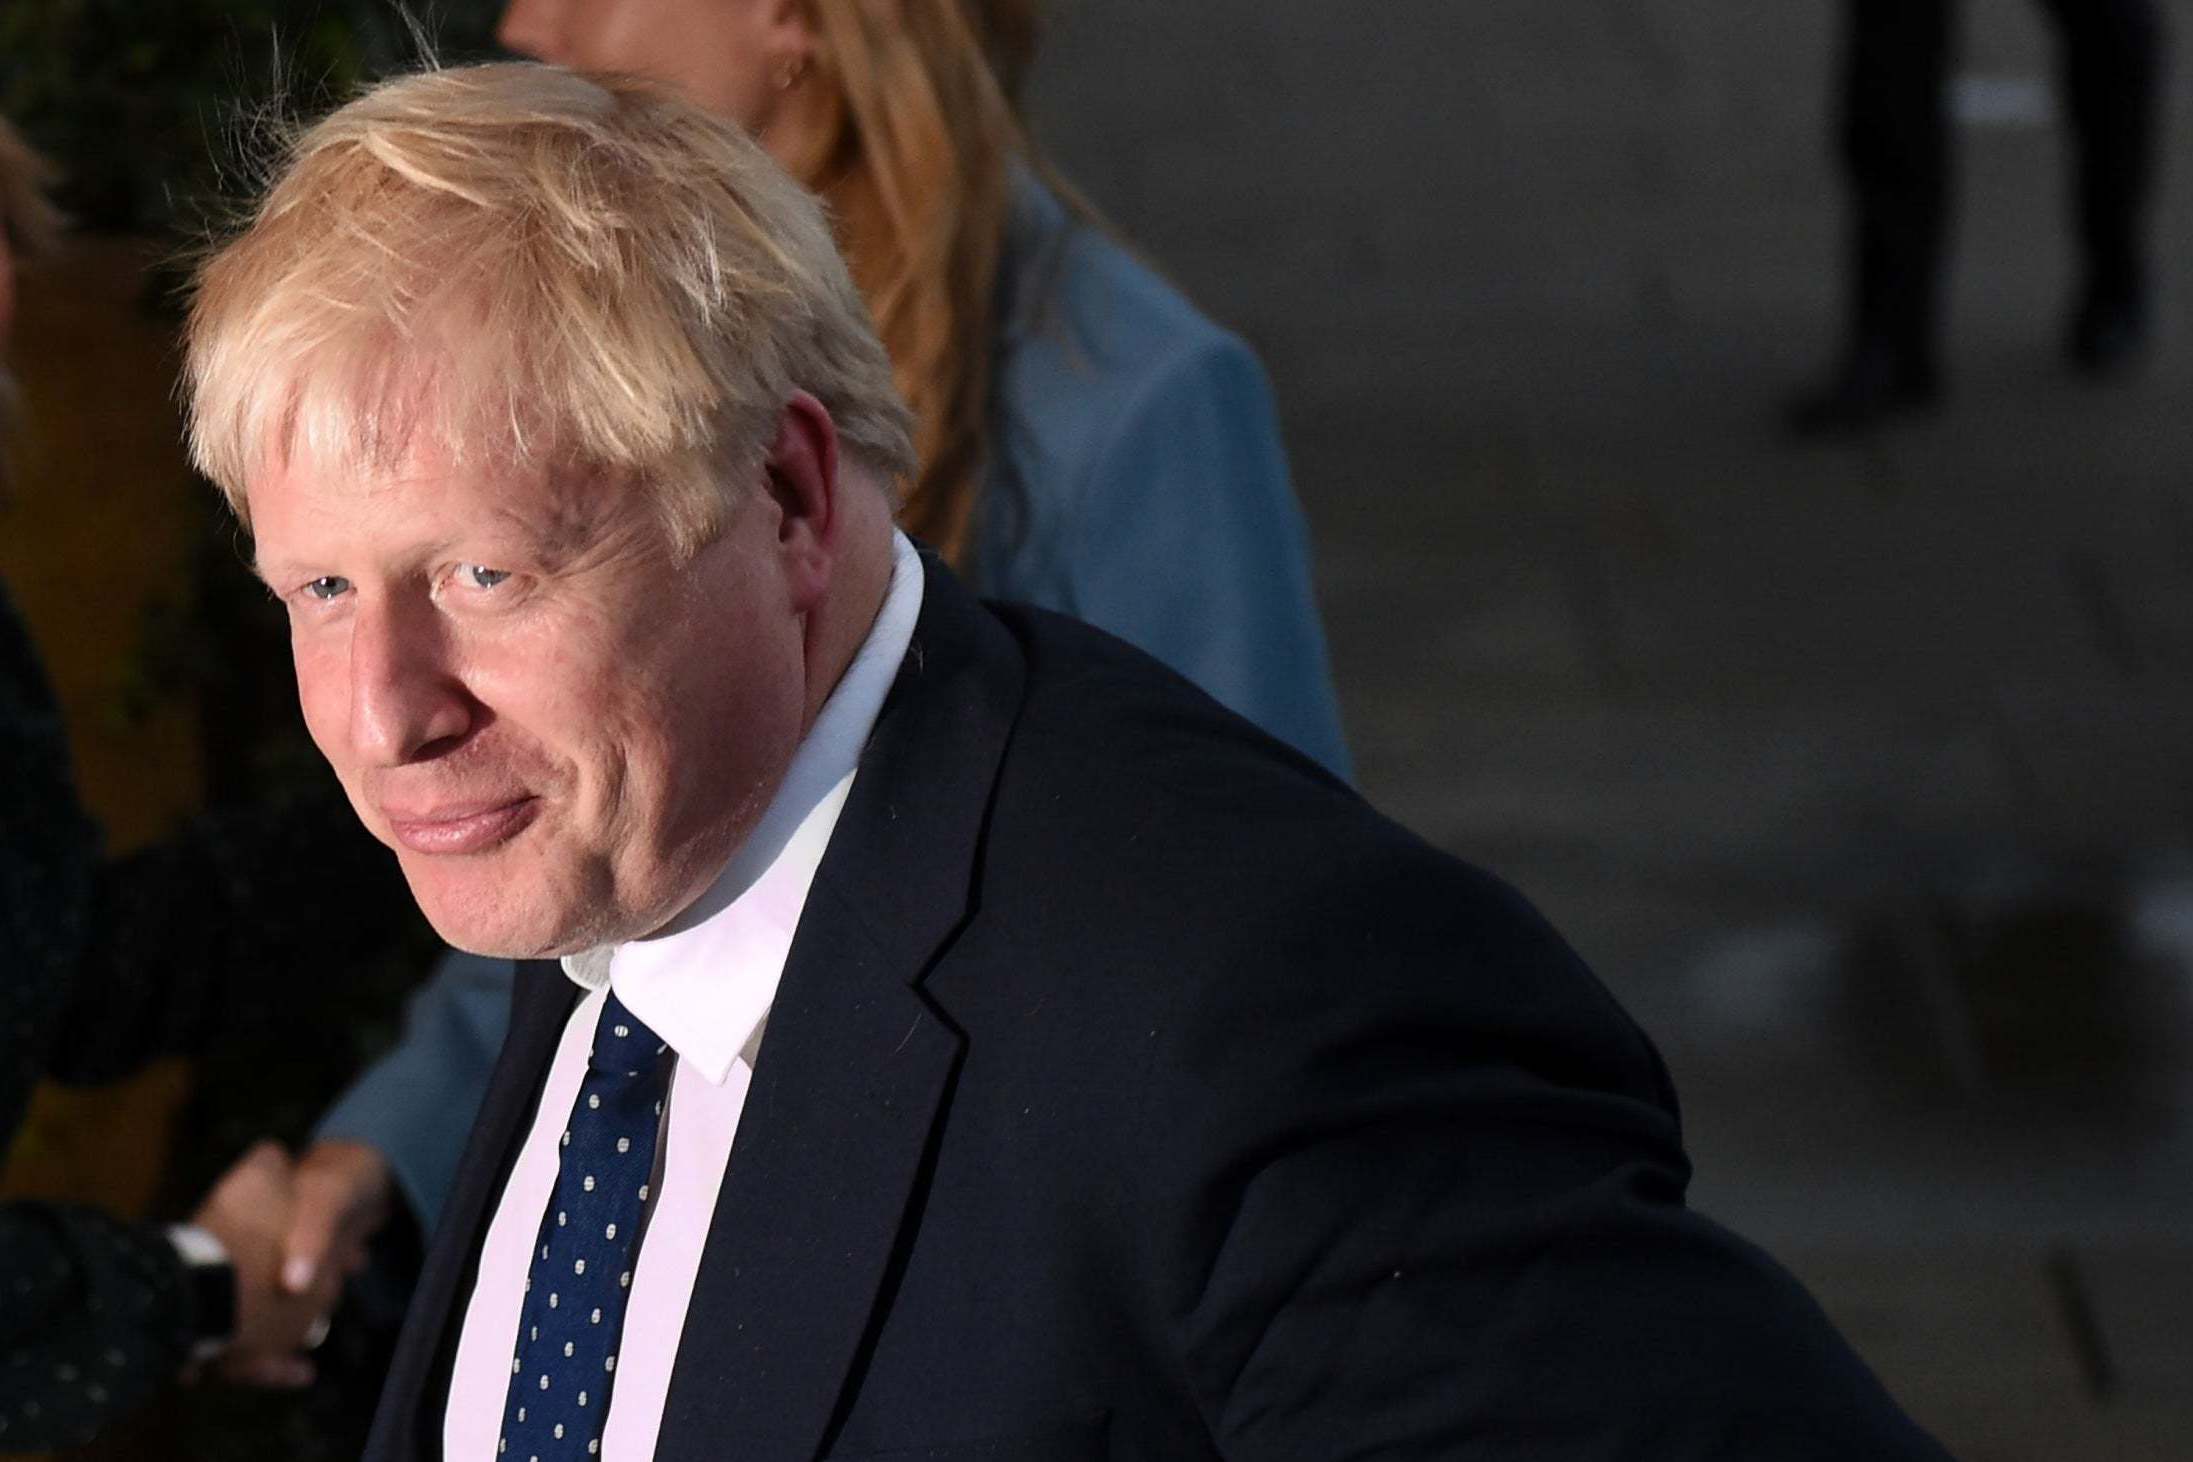 Brexit: Boris Johnson risks sending party into 'terminal decline' because of no-deal, warn rebels